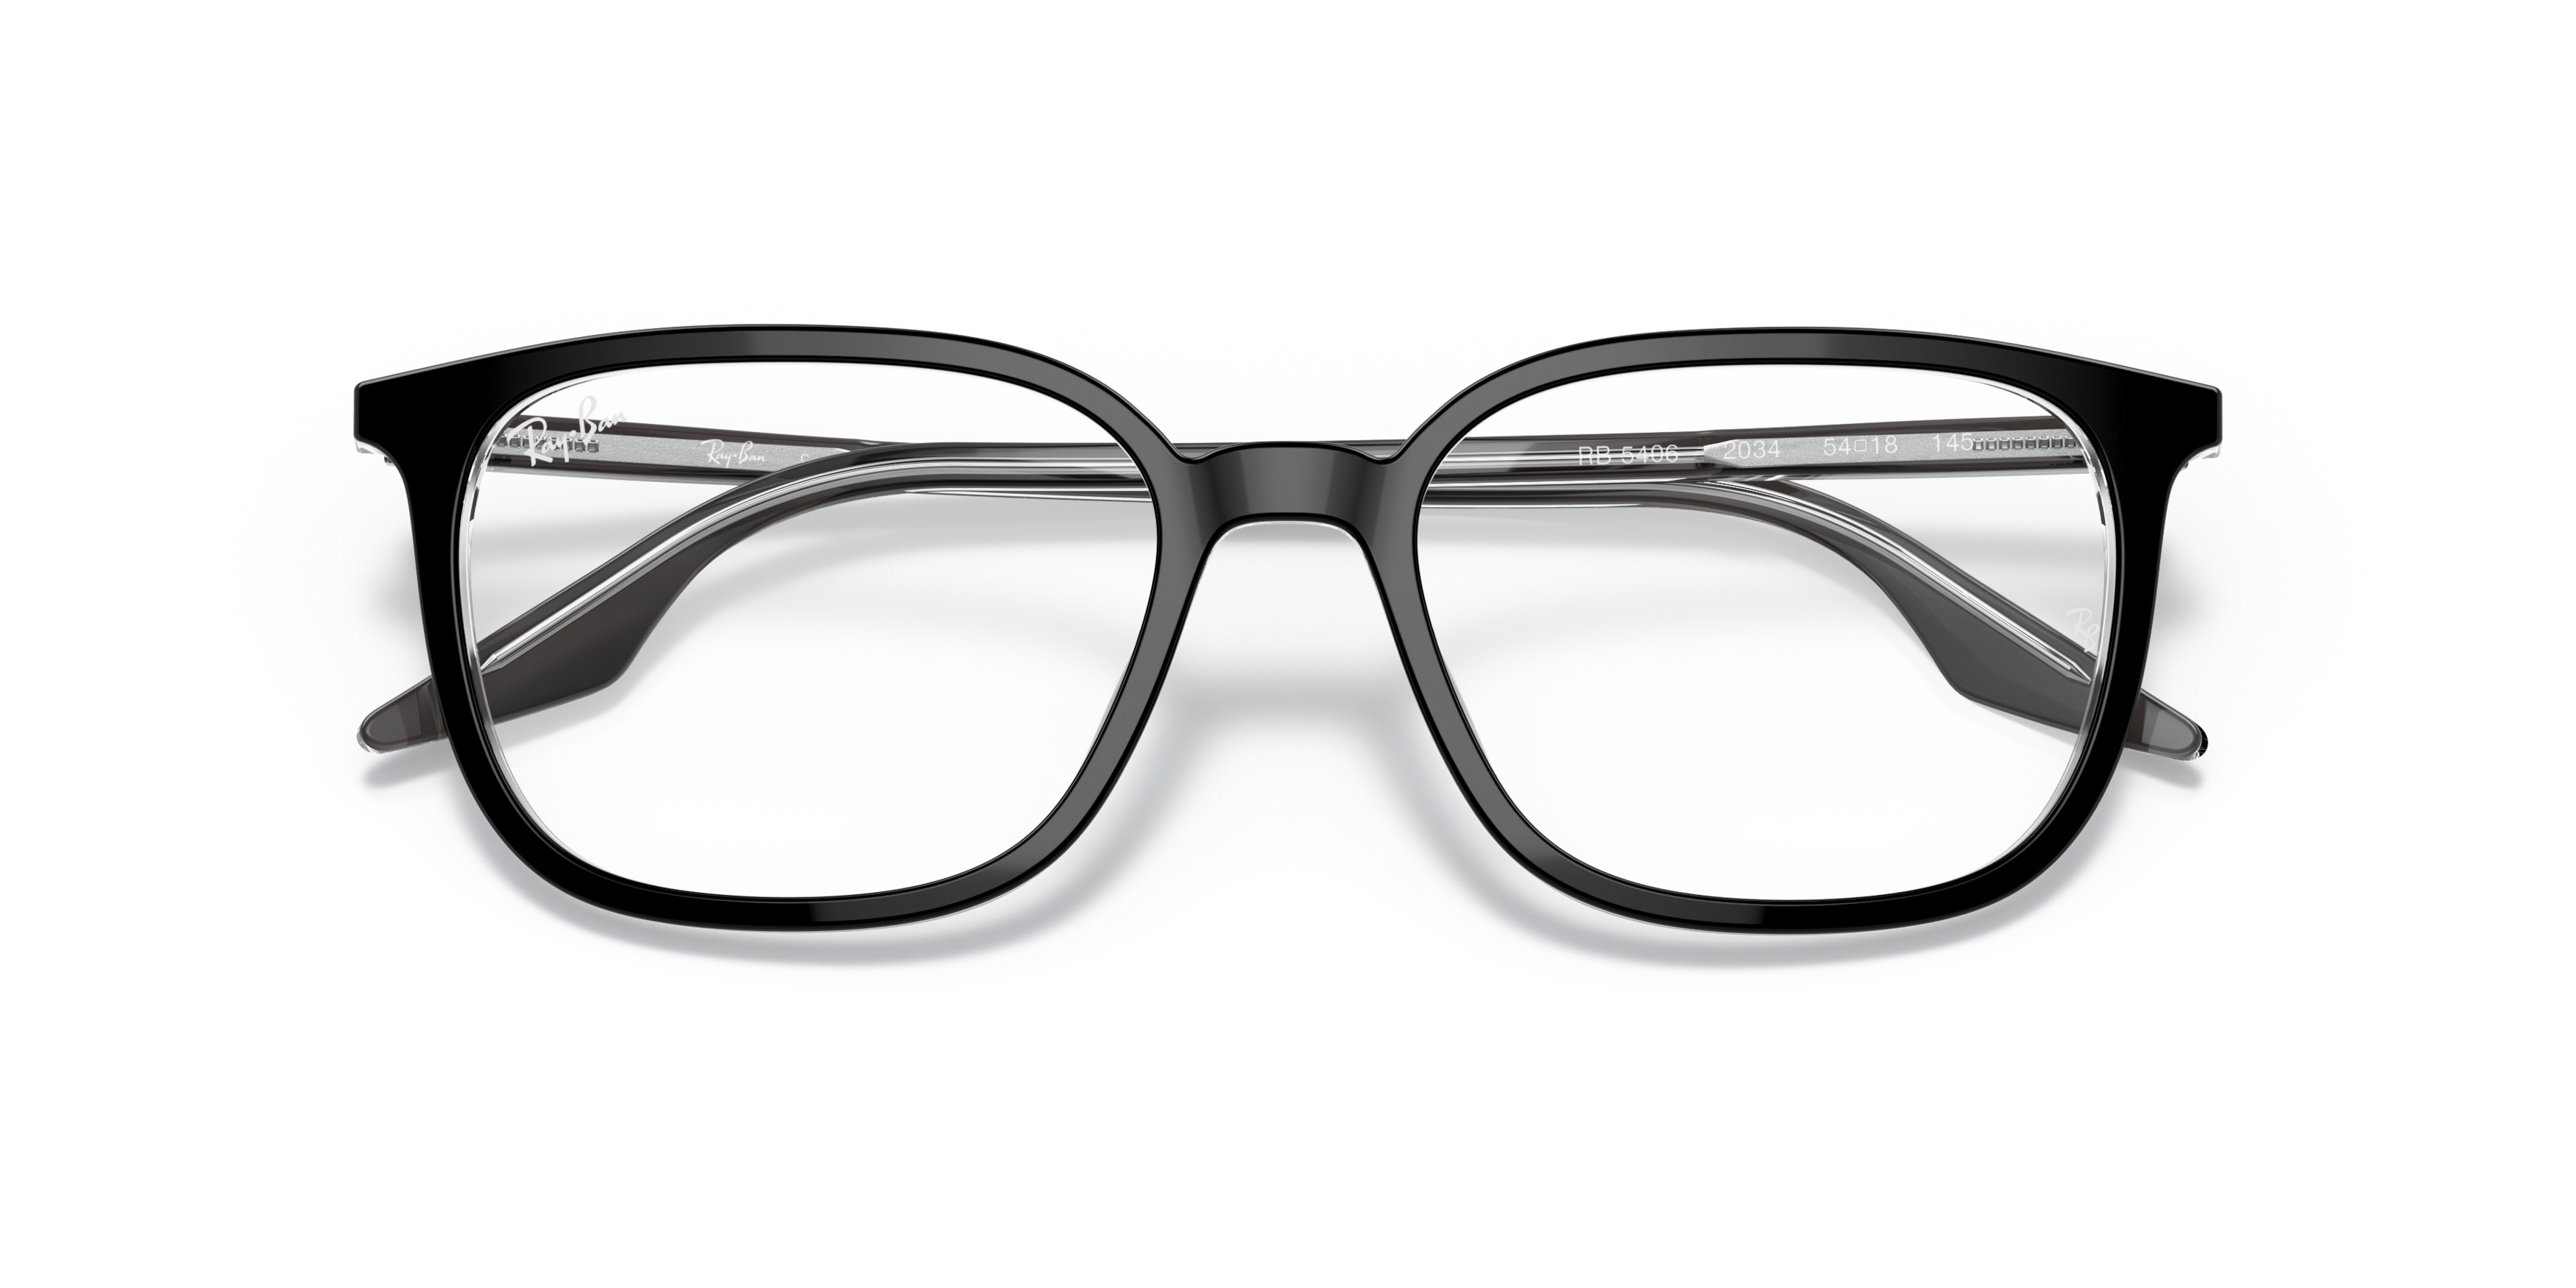 Folded Ray-Ban RX 5406 Glasses Transparent / Black